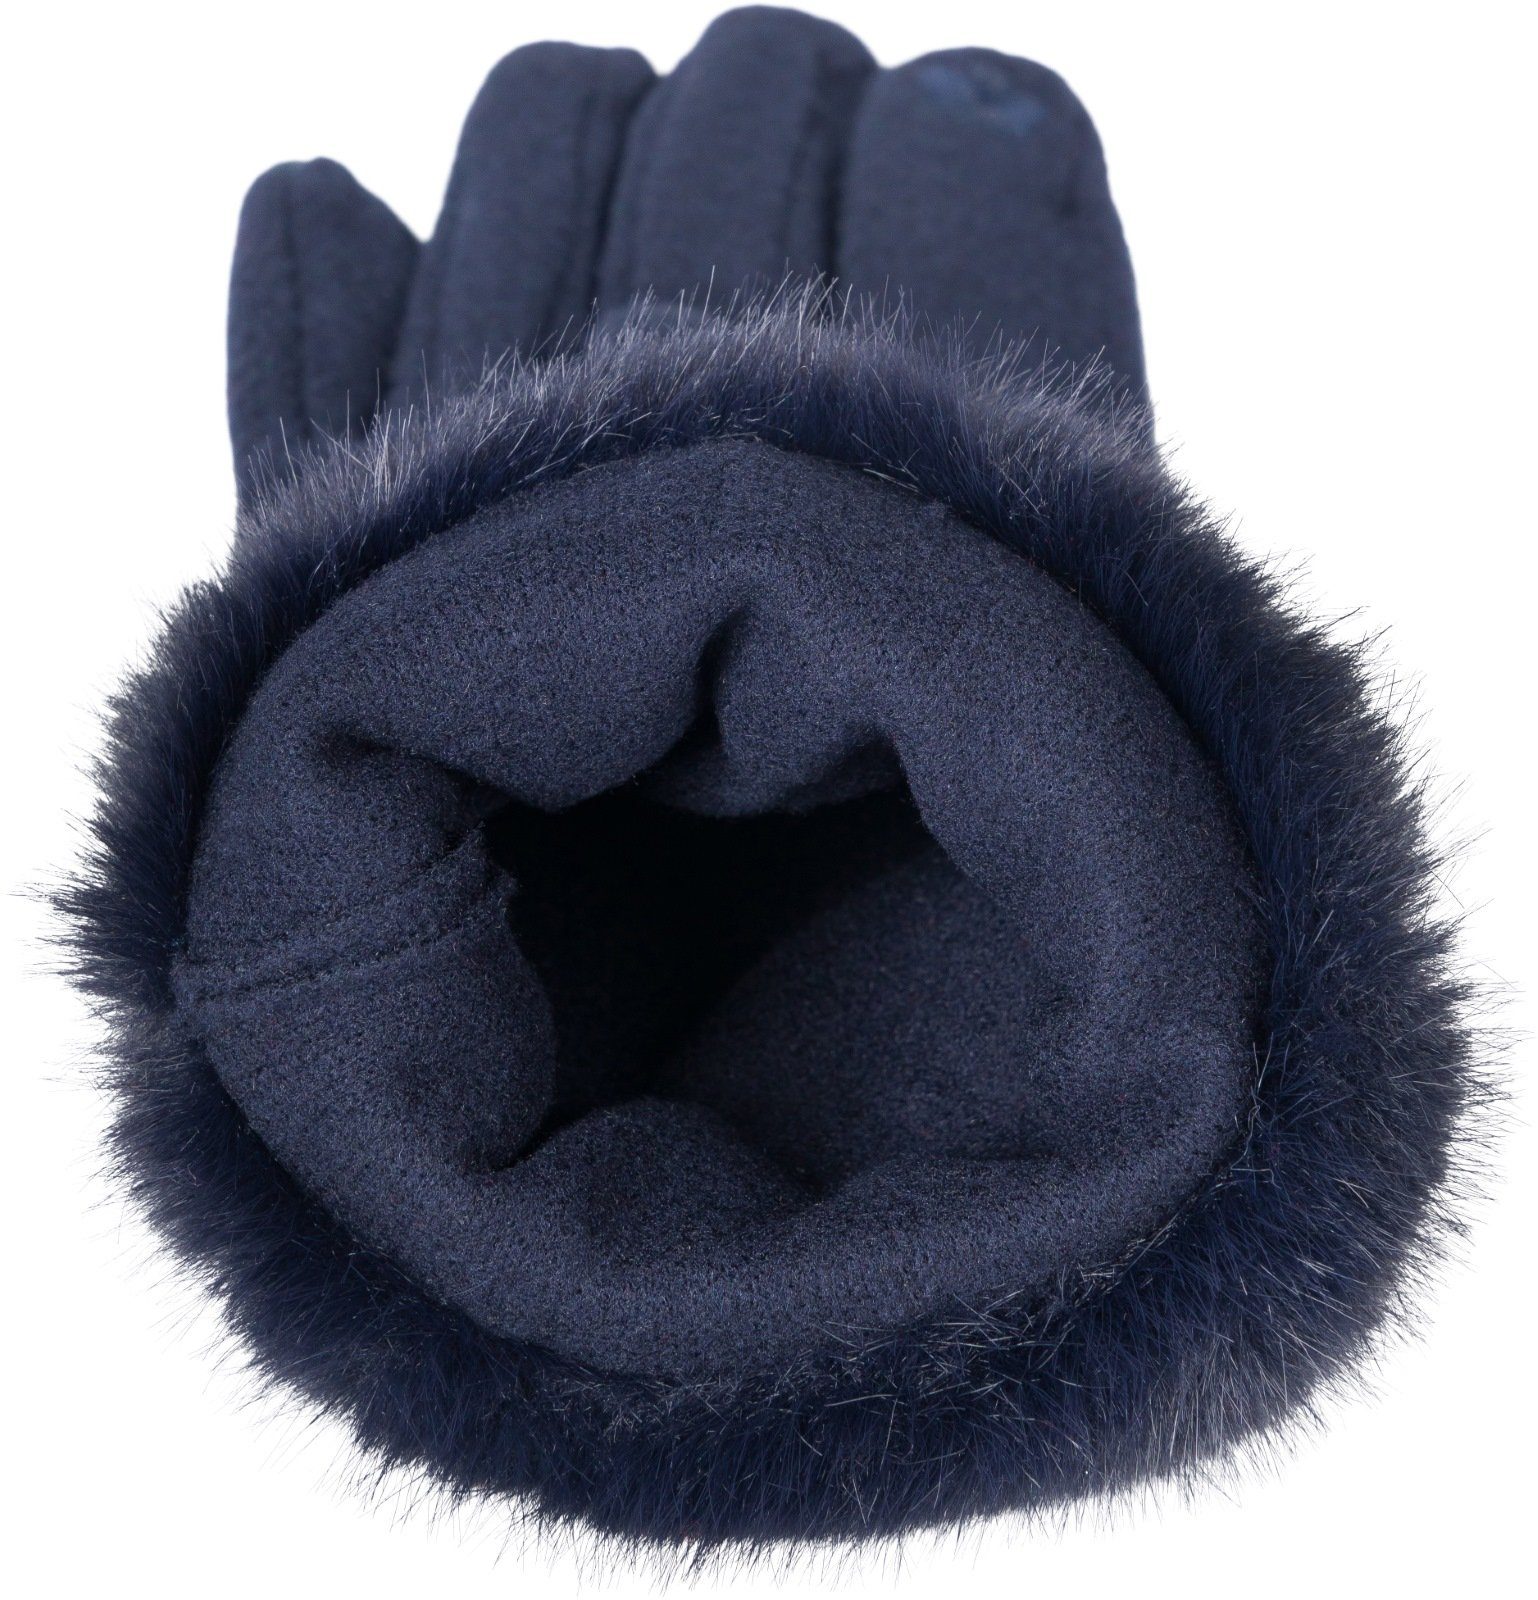 Dunkelblau Fleecehandschuhe Unifarbene Handschuhe styleBREAKER Kunstfell mit Touchscreen